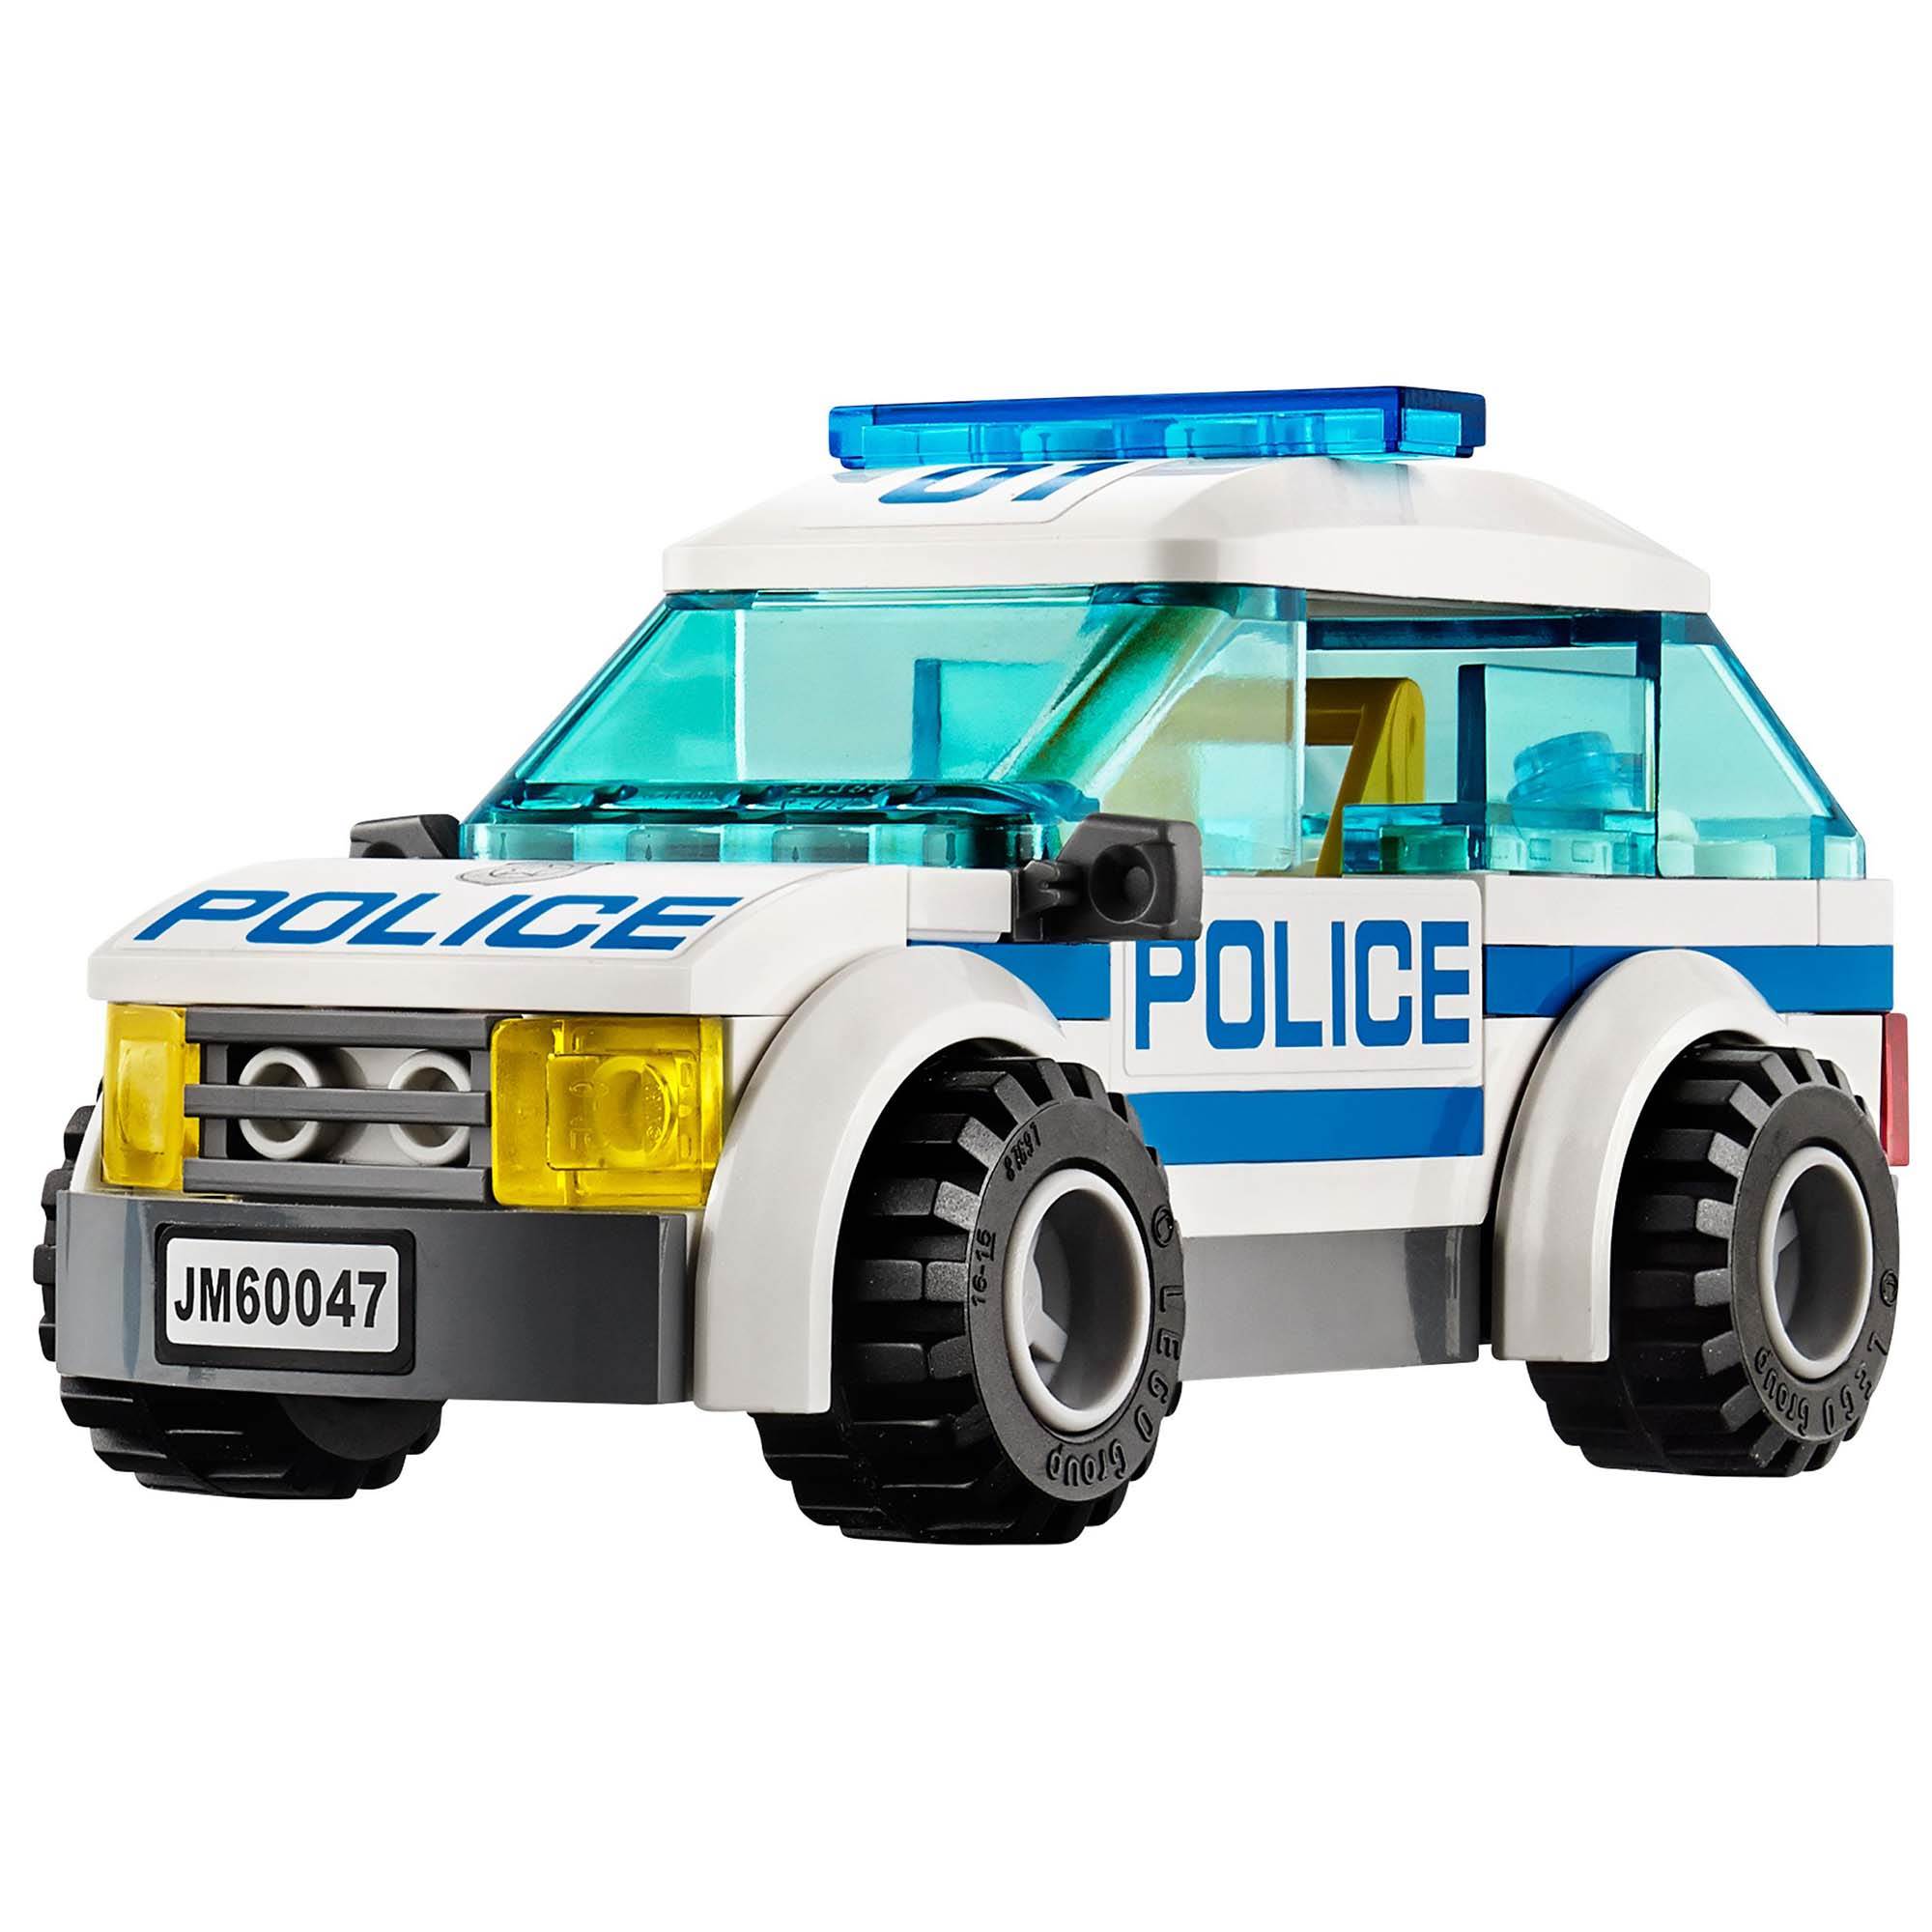 LEGO City 60047 - Police Station - image 5 of 7